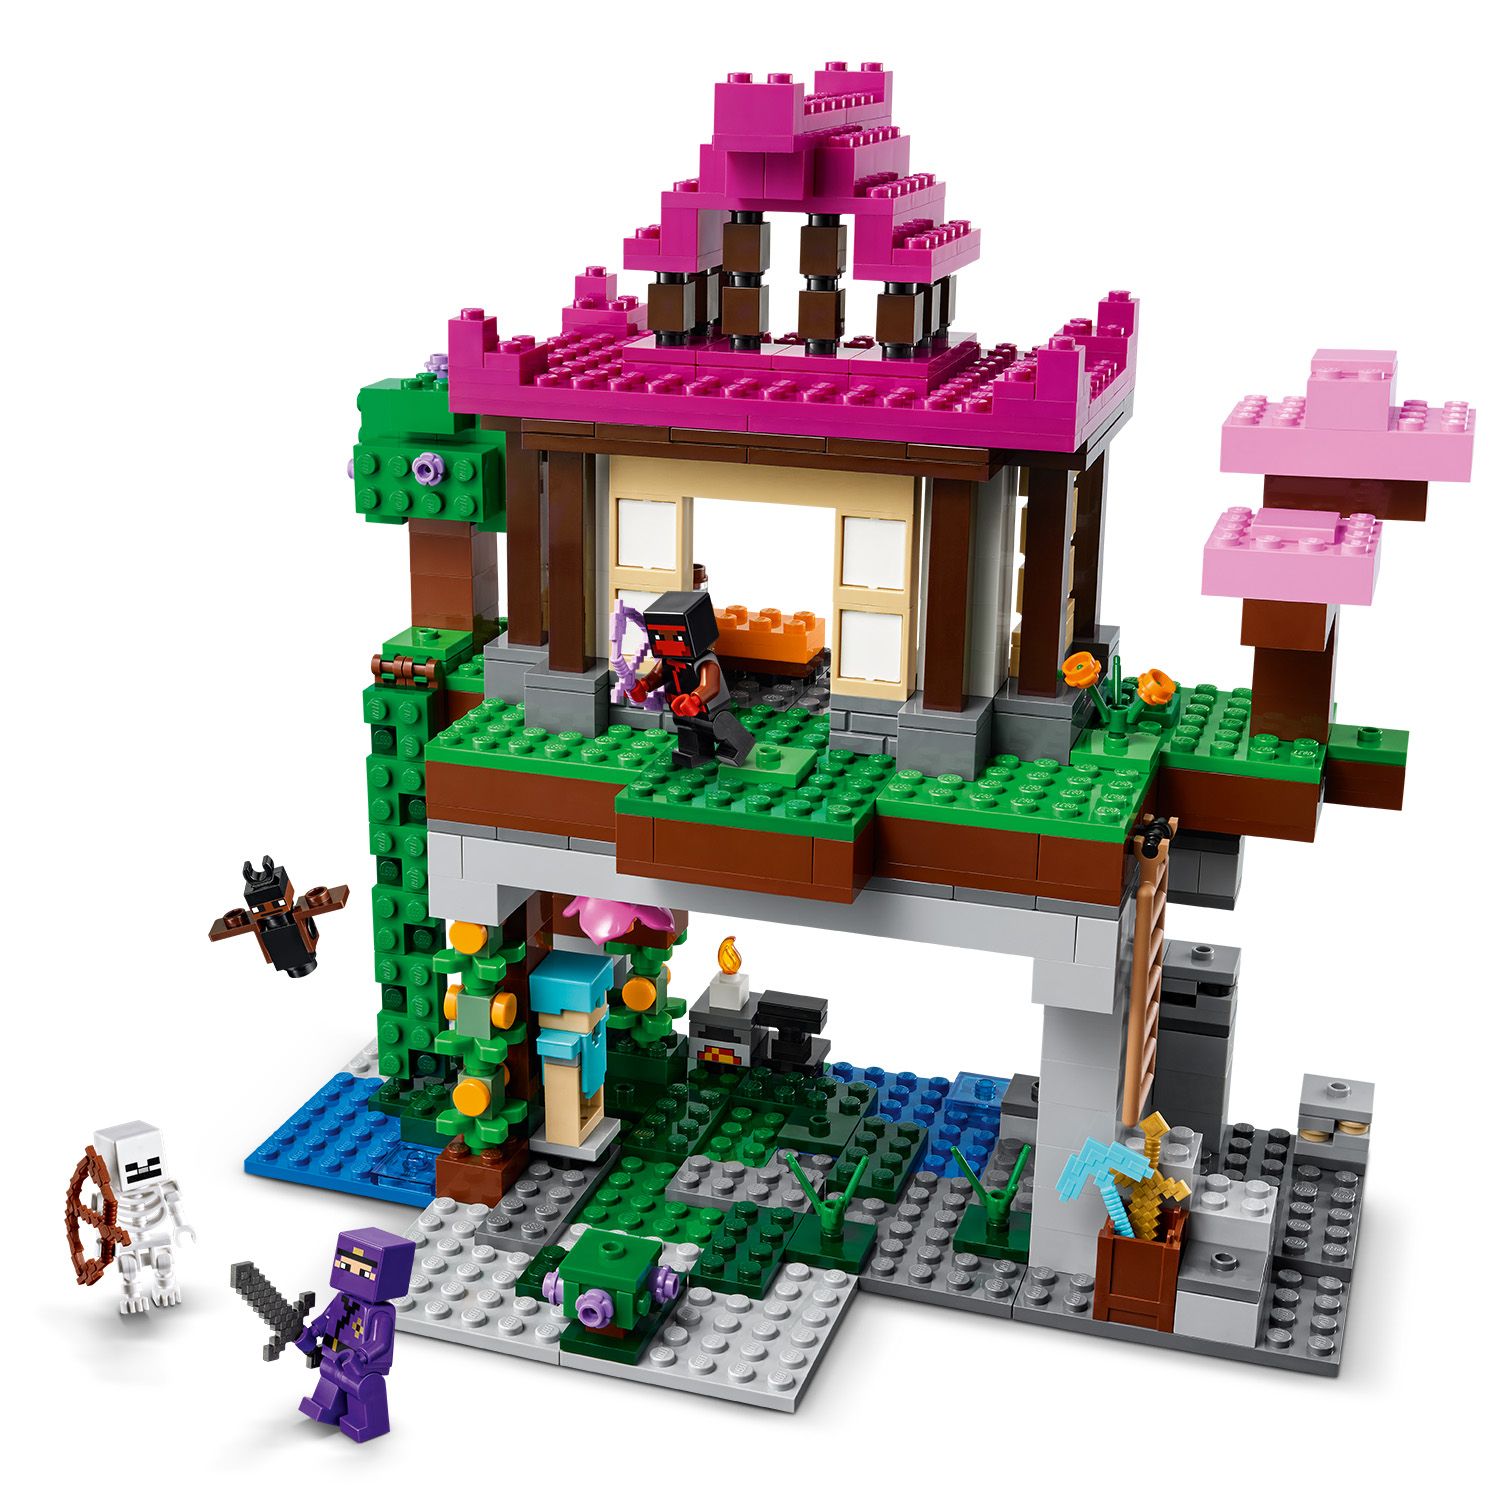 Modulárny darček zo série LEGO® Minecraft®